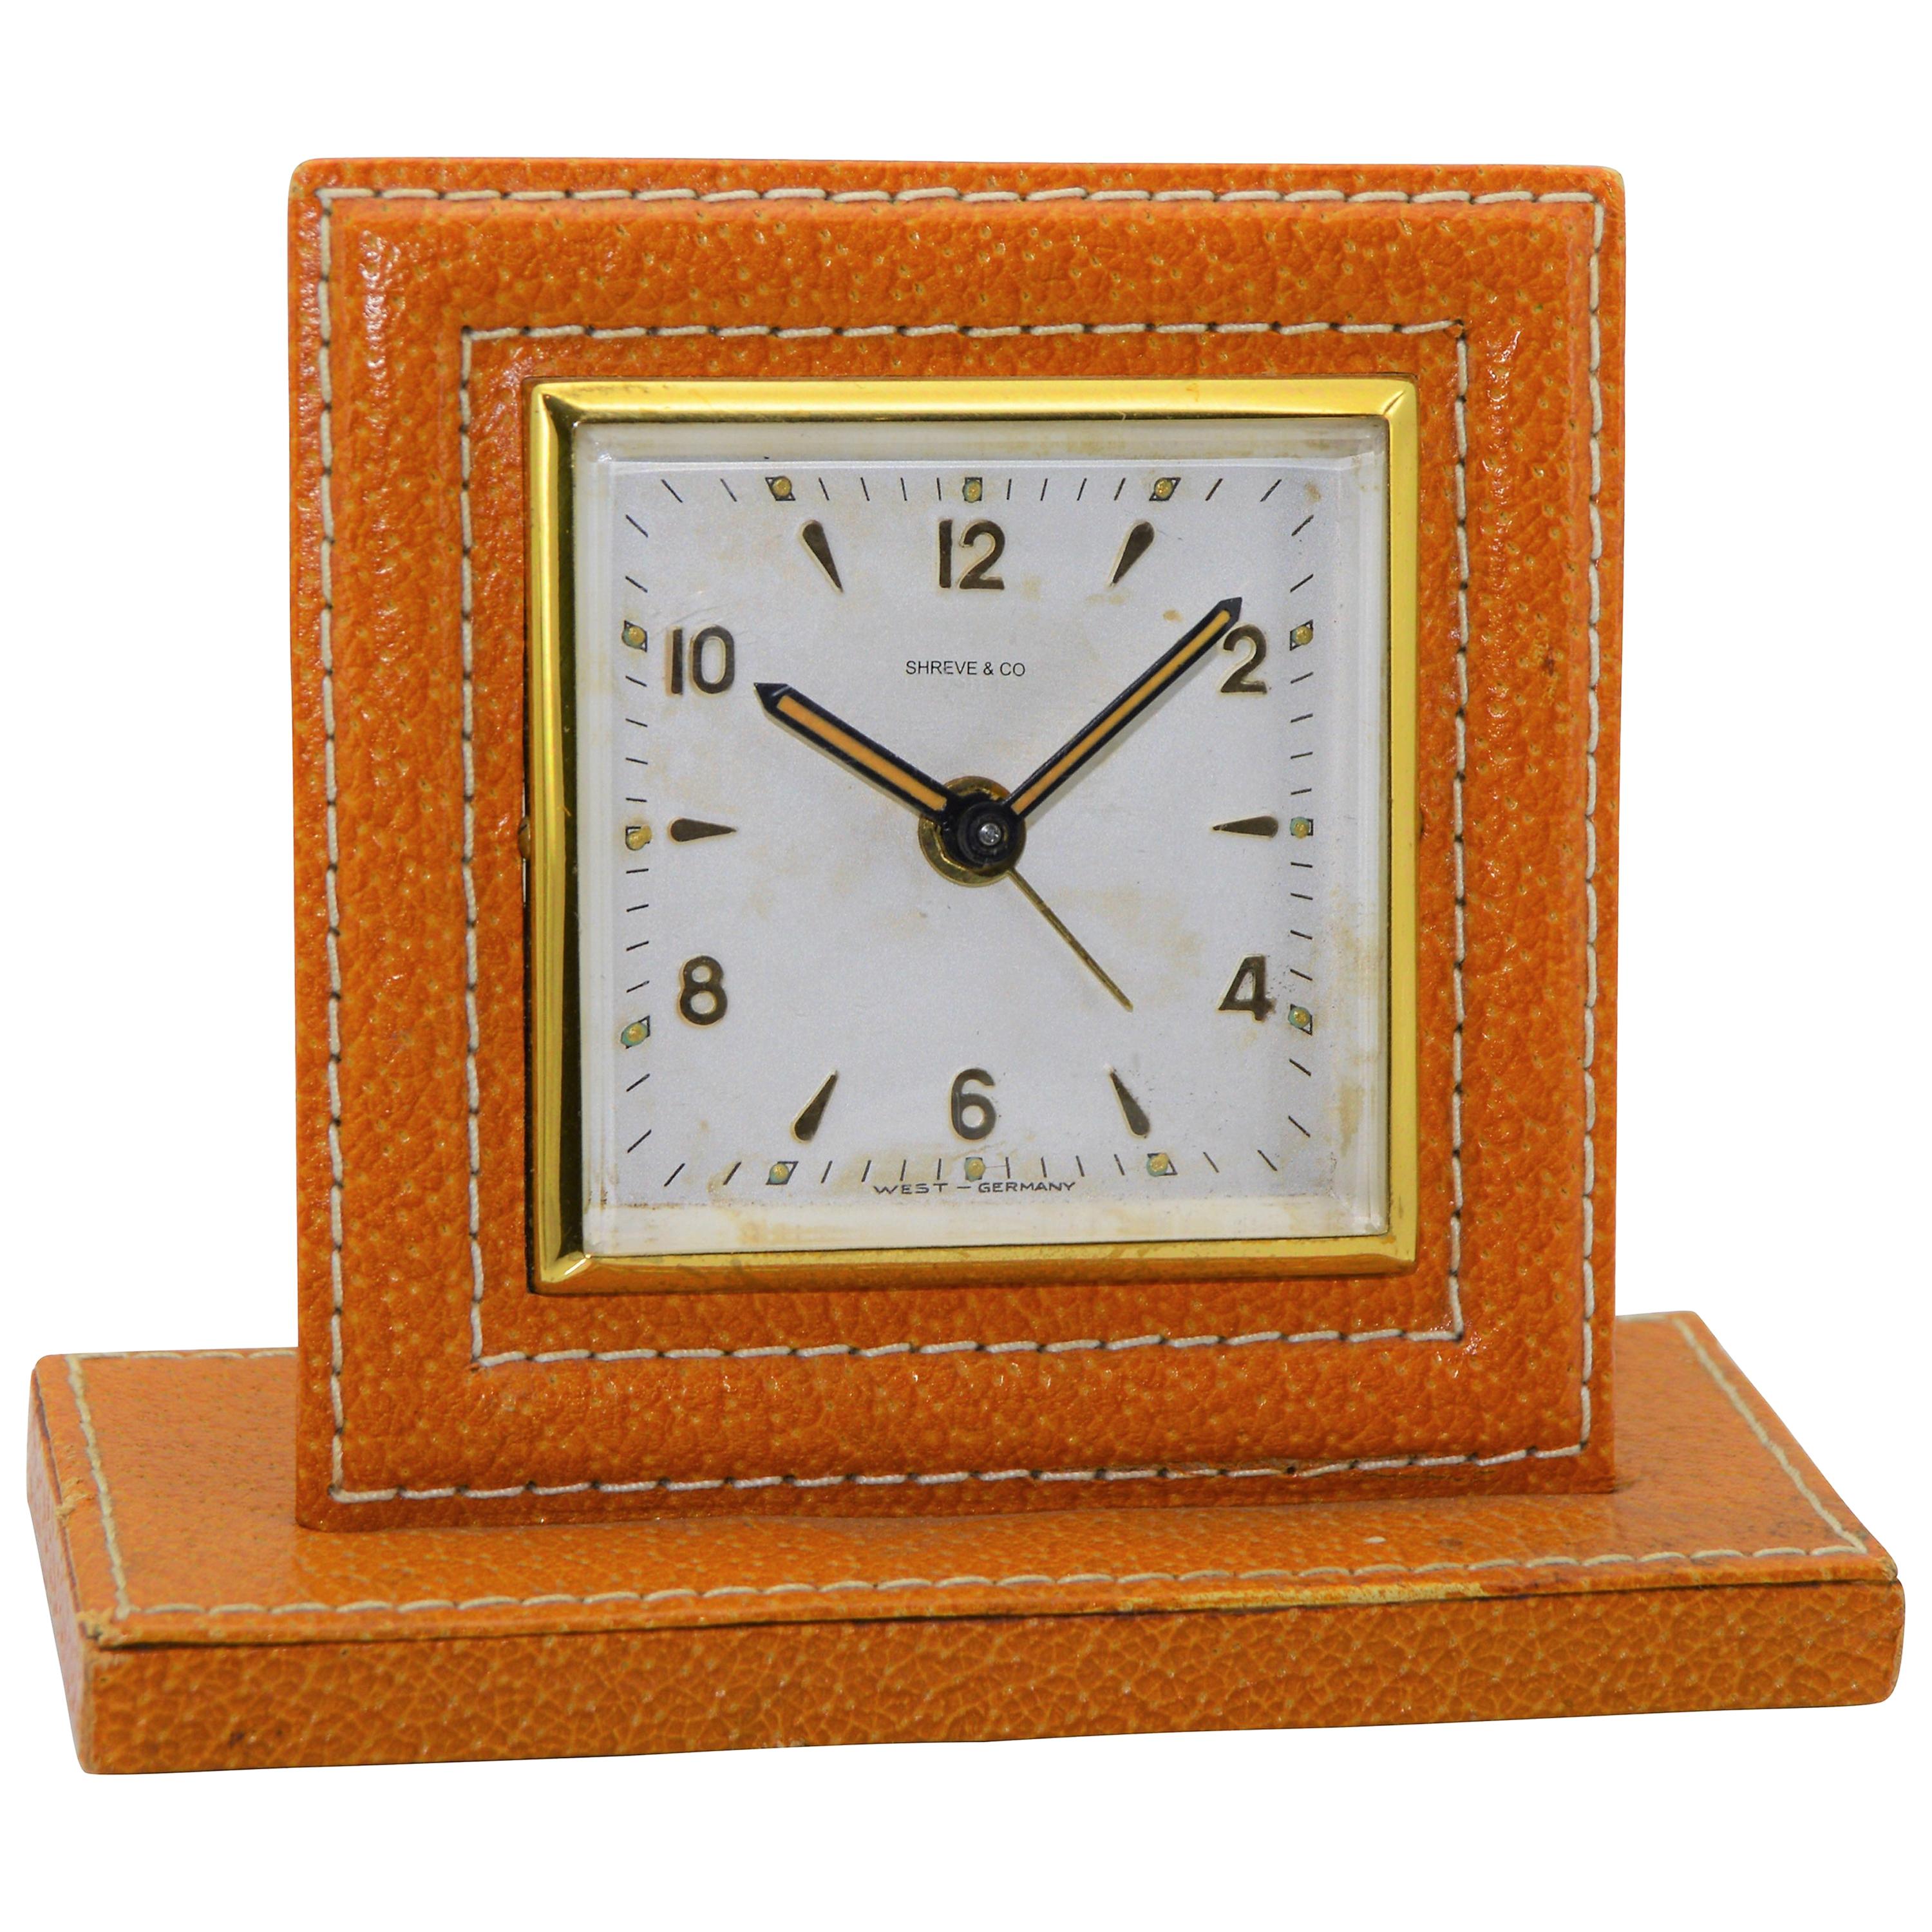 Shreve & Co. Small Leather Bedside Alarm Clock, 1930s